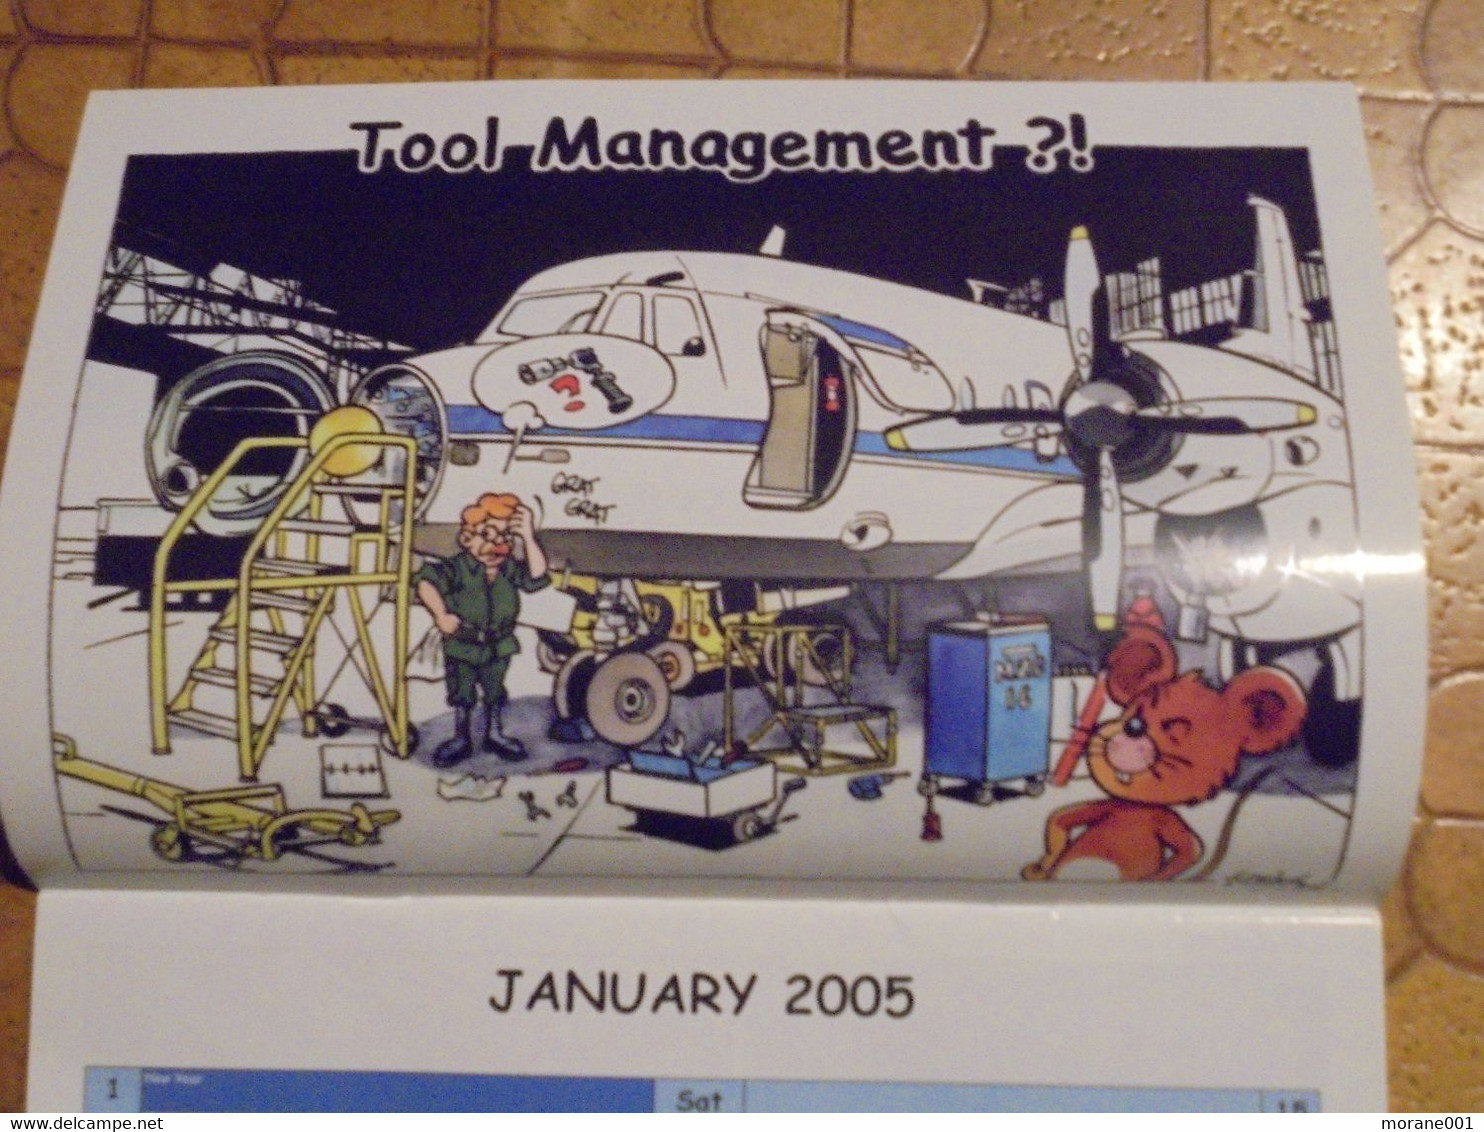 Calendrier  2005 Aviation Safety Publication Comopsair Defence  Illustrations J-L Delvaux 2005 TBE - Agendas & Calendarios